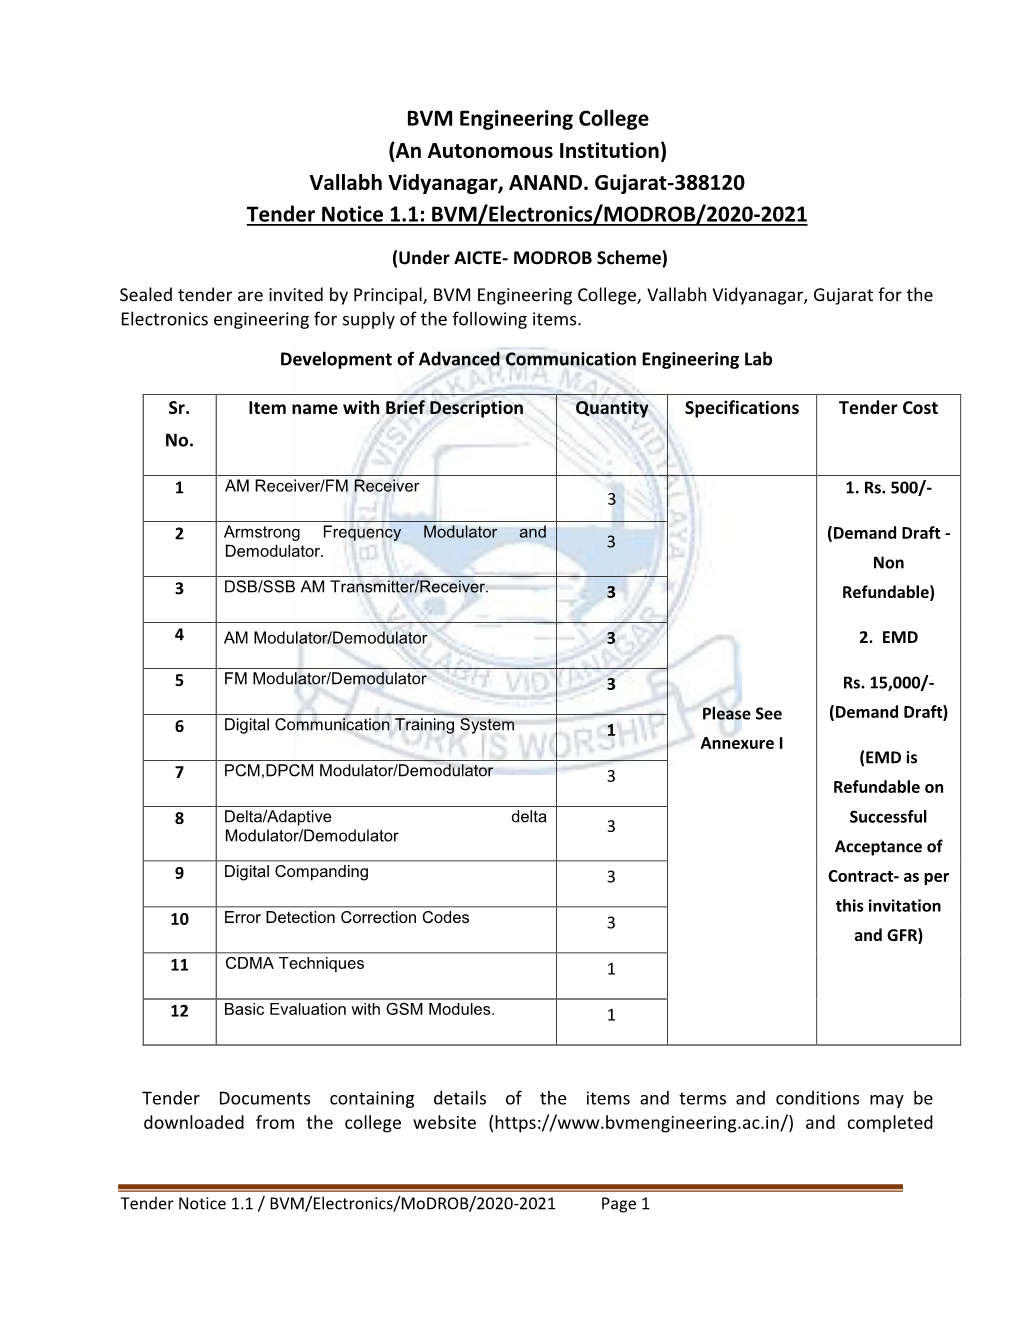 BVM Engineering College (An Autonomous Institution) Vallabh Vidyanagar, ANAND